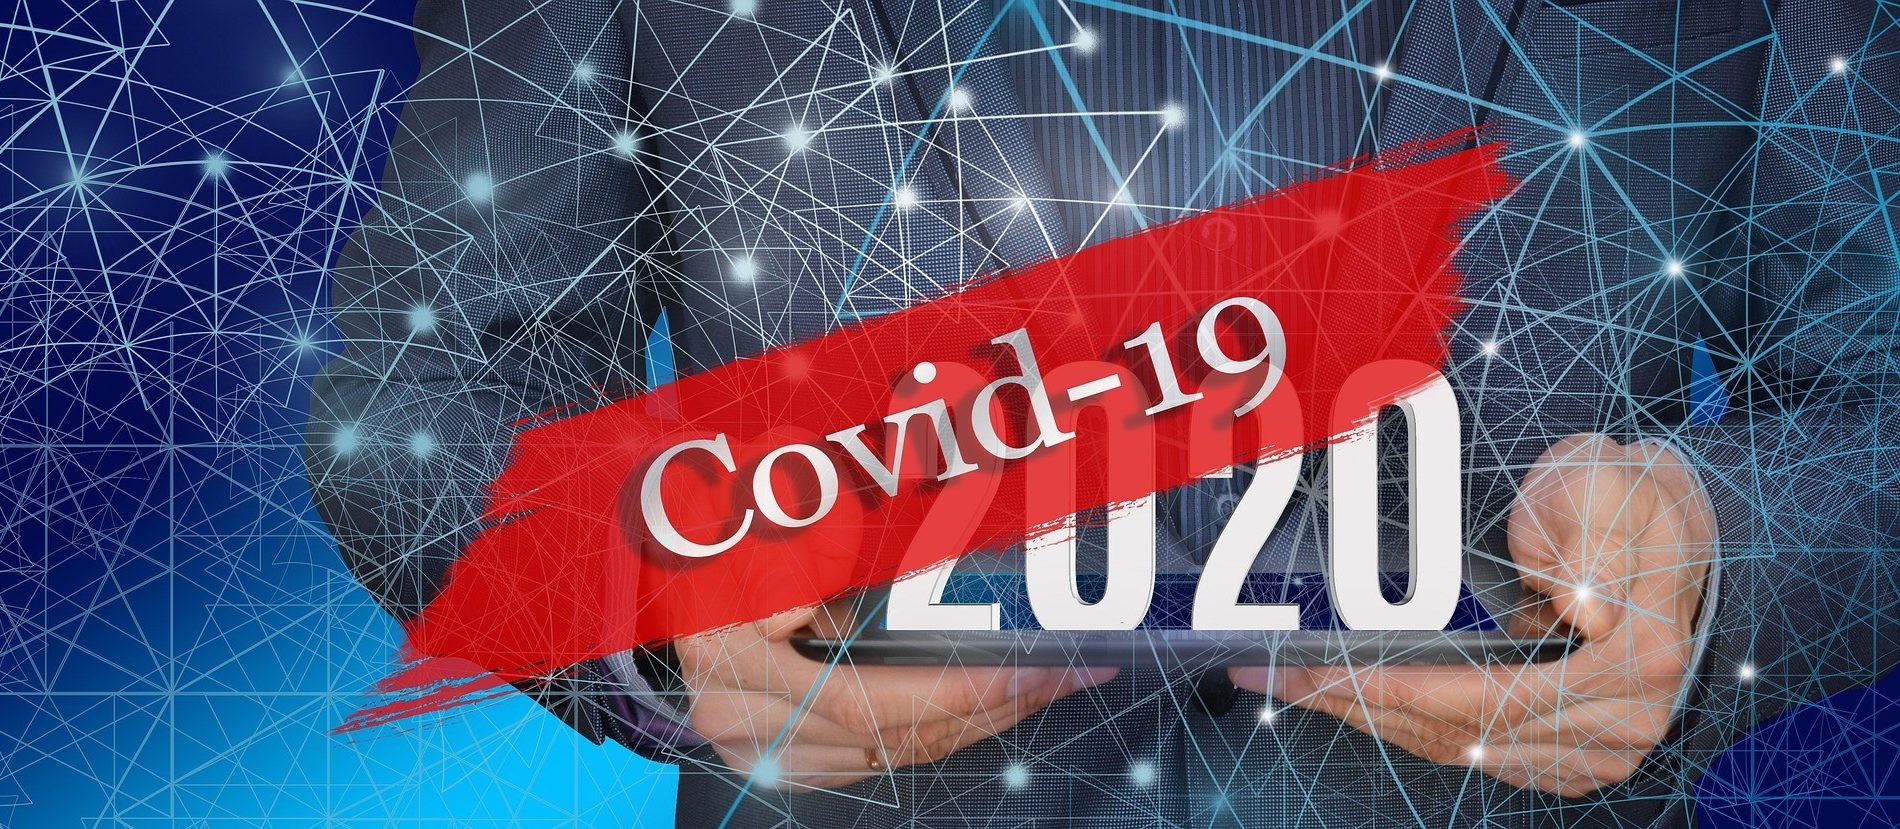 Coronavirus in Croatia: Should I Cancel my Sailing Vacation?